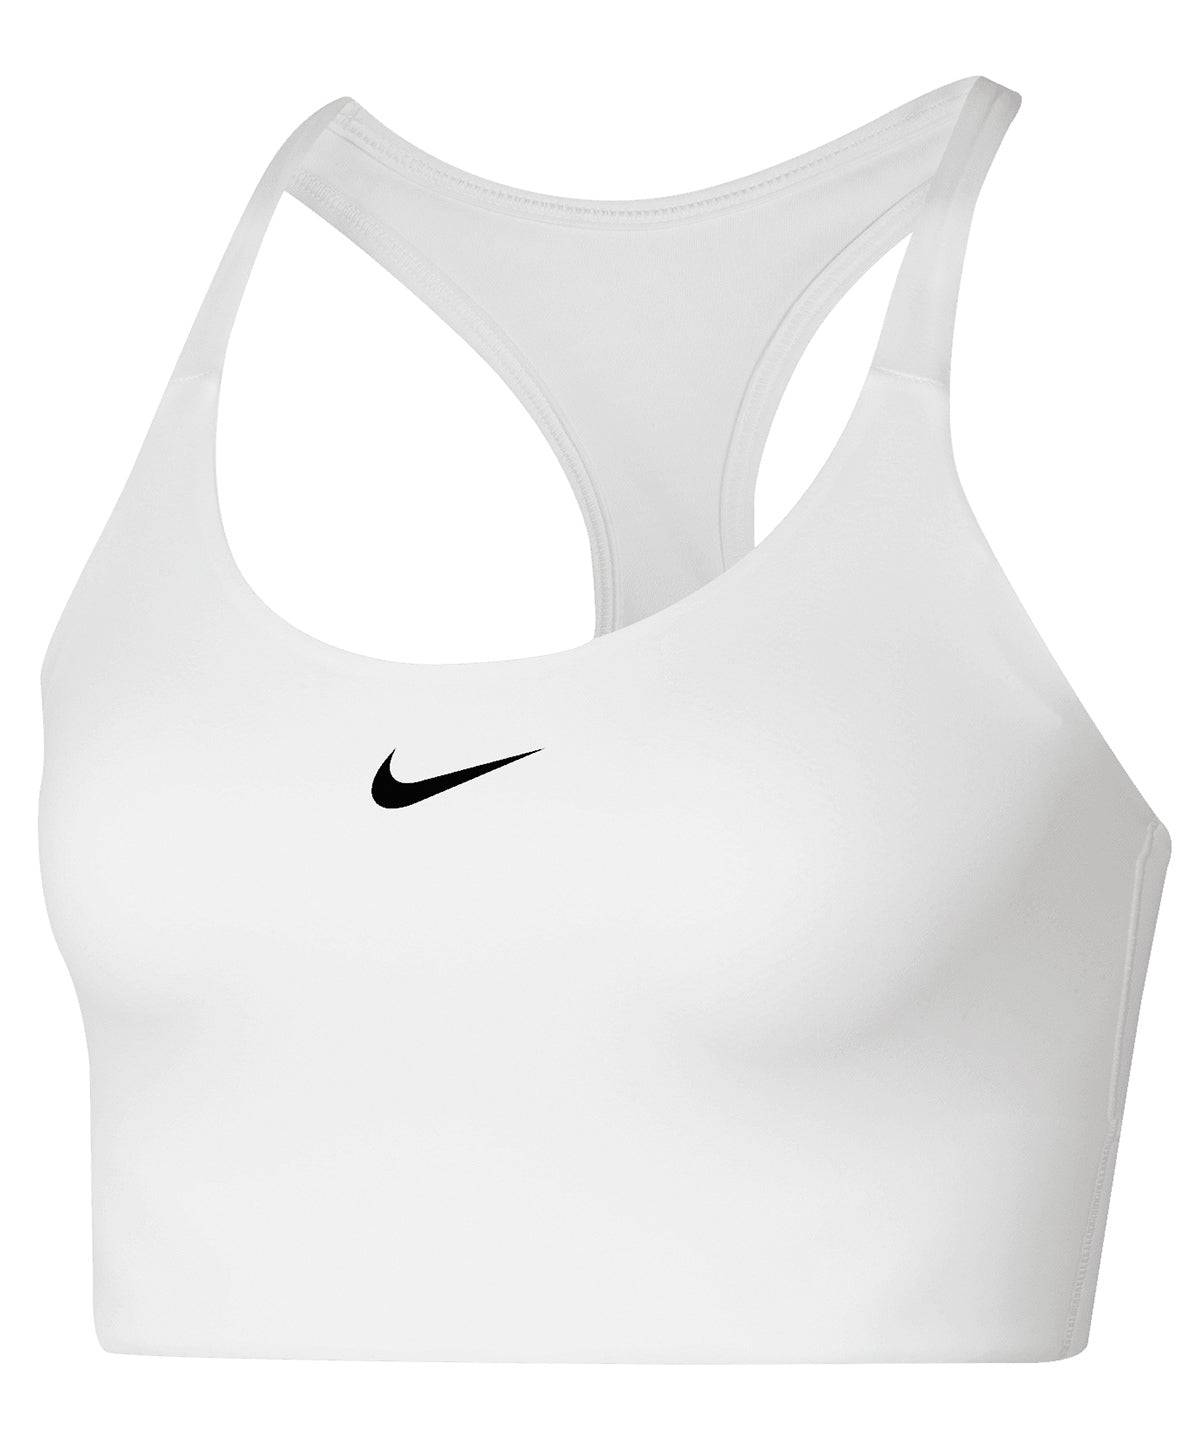 White/Black - Women’s Nike Dri-FIT Swoosh one-piece bra